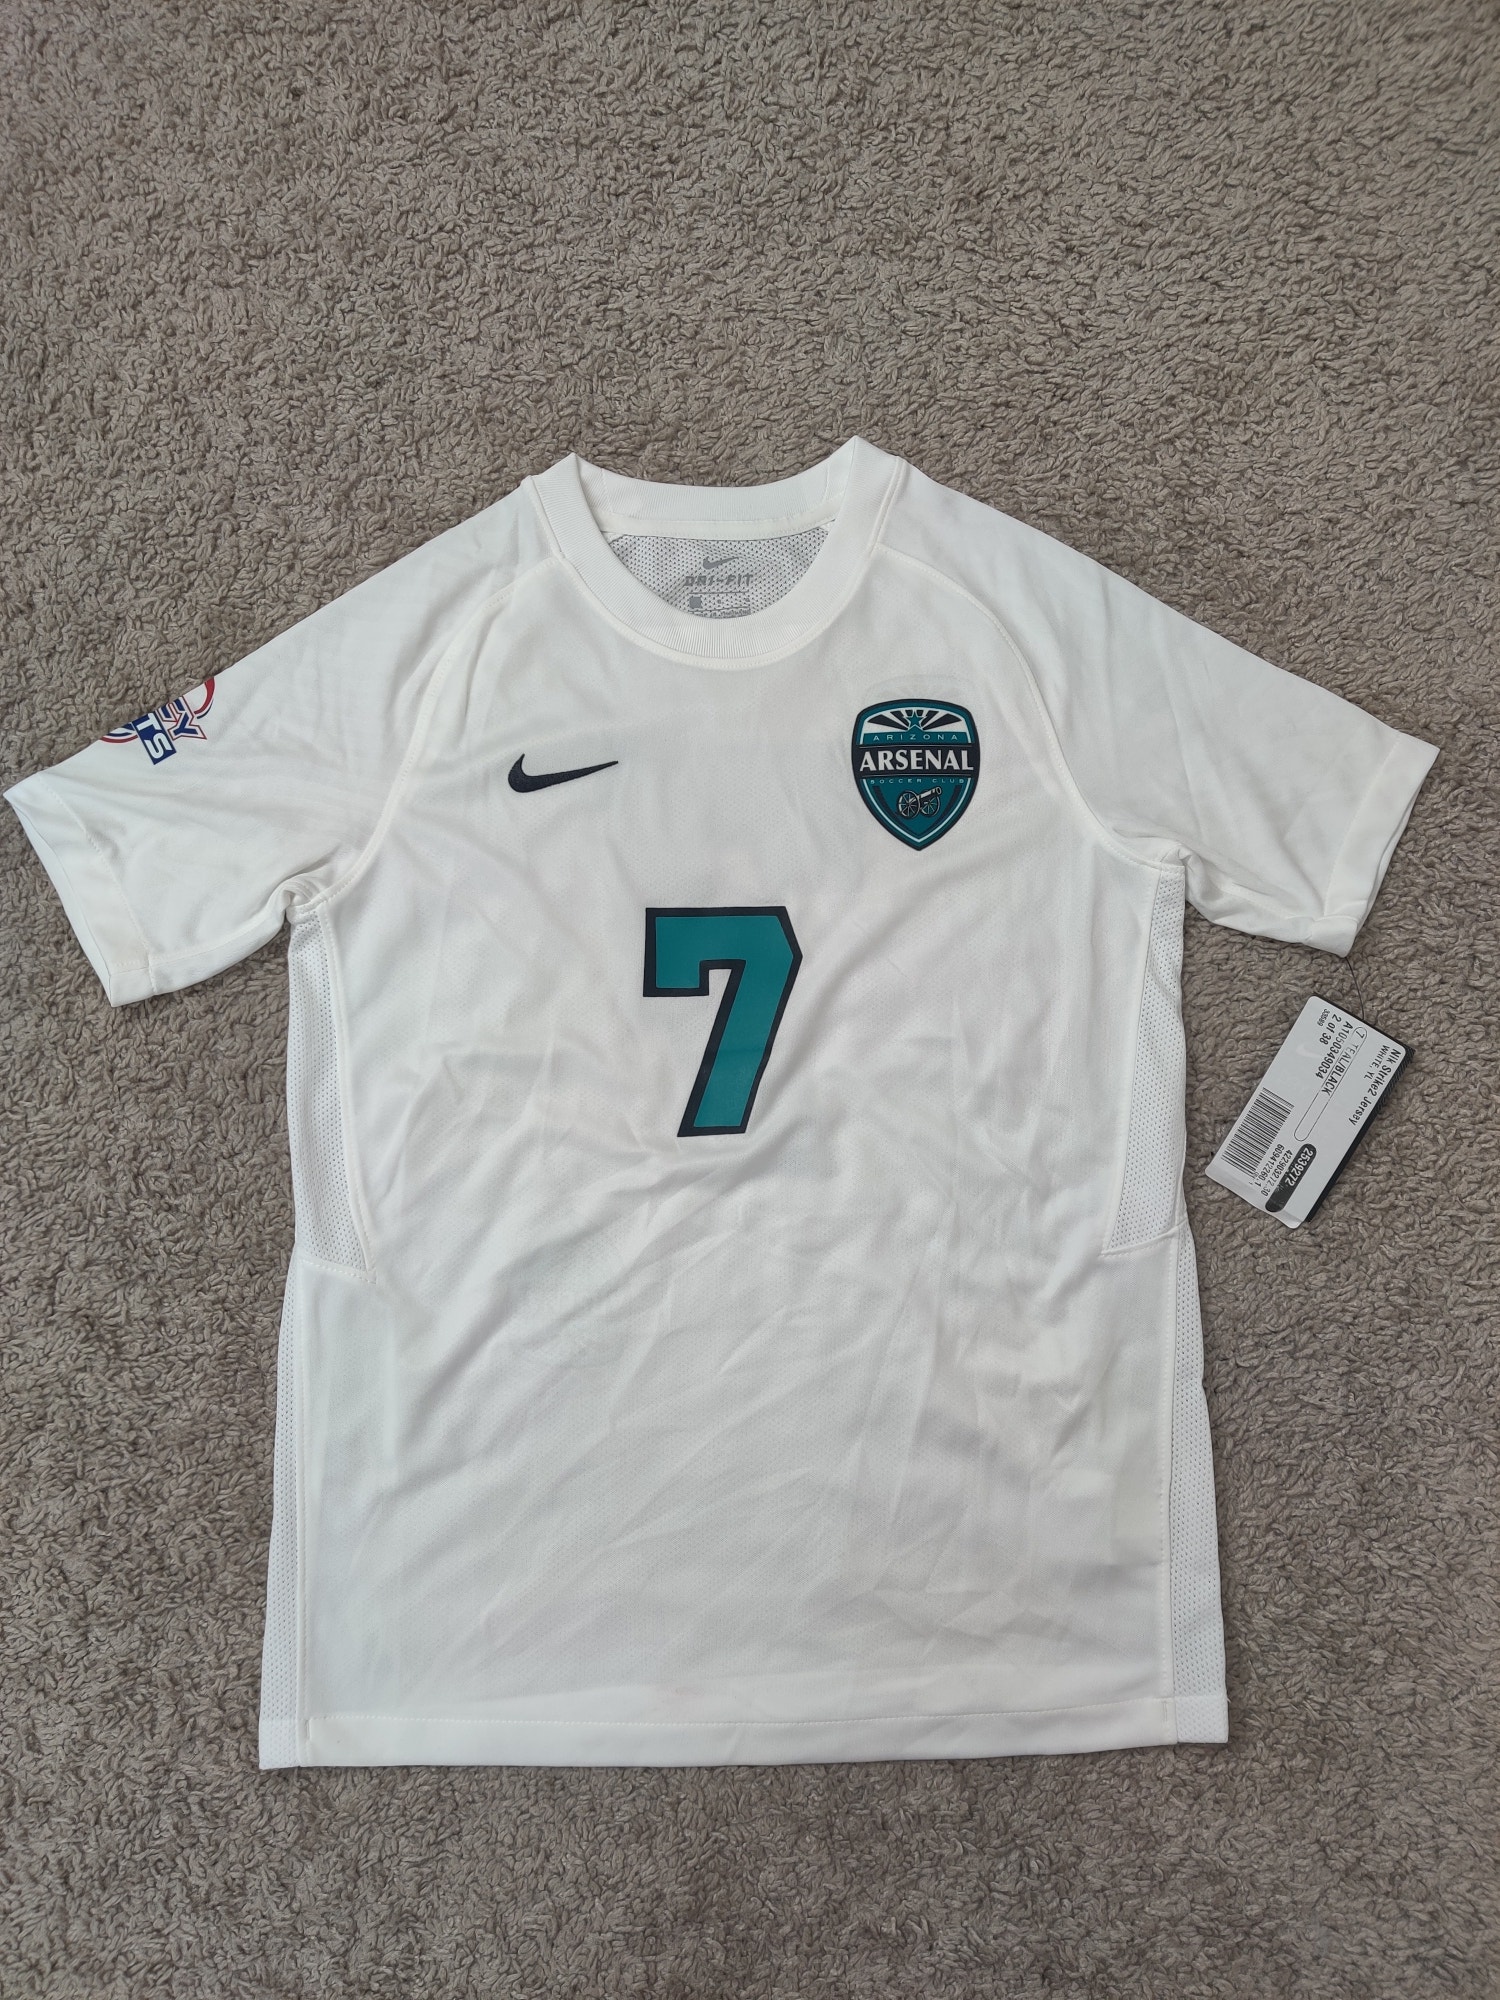 (V) NEW Nike Dri-Fit Youth Arsenal Arizona Soccer Club #7 shirt jersey sz L - Picture 2 of 12